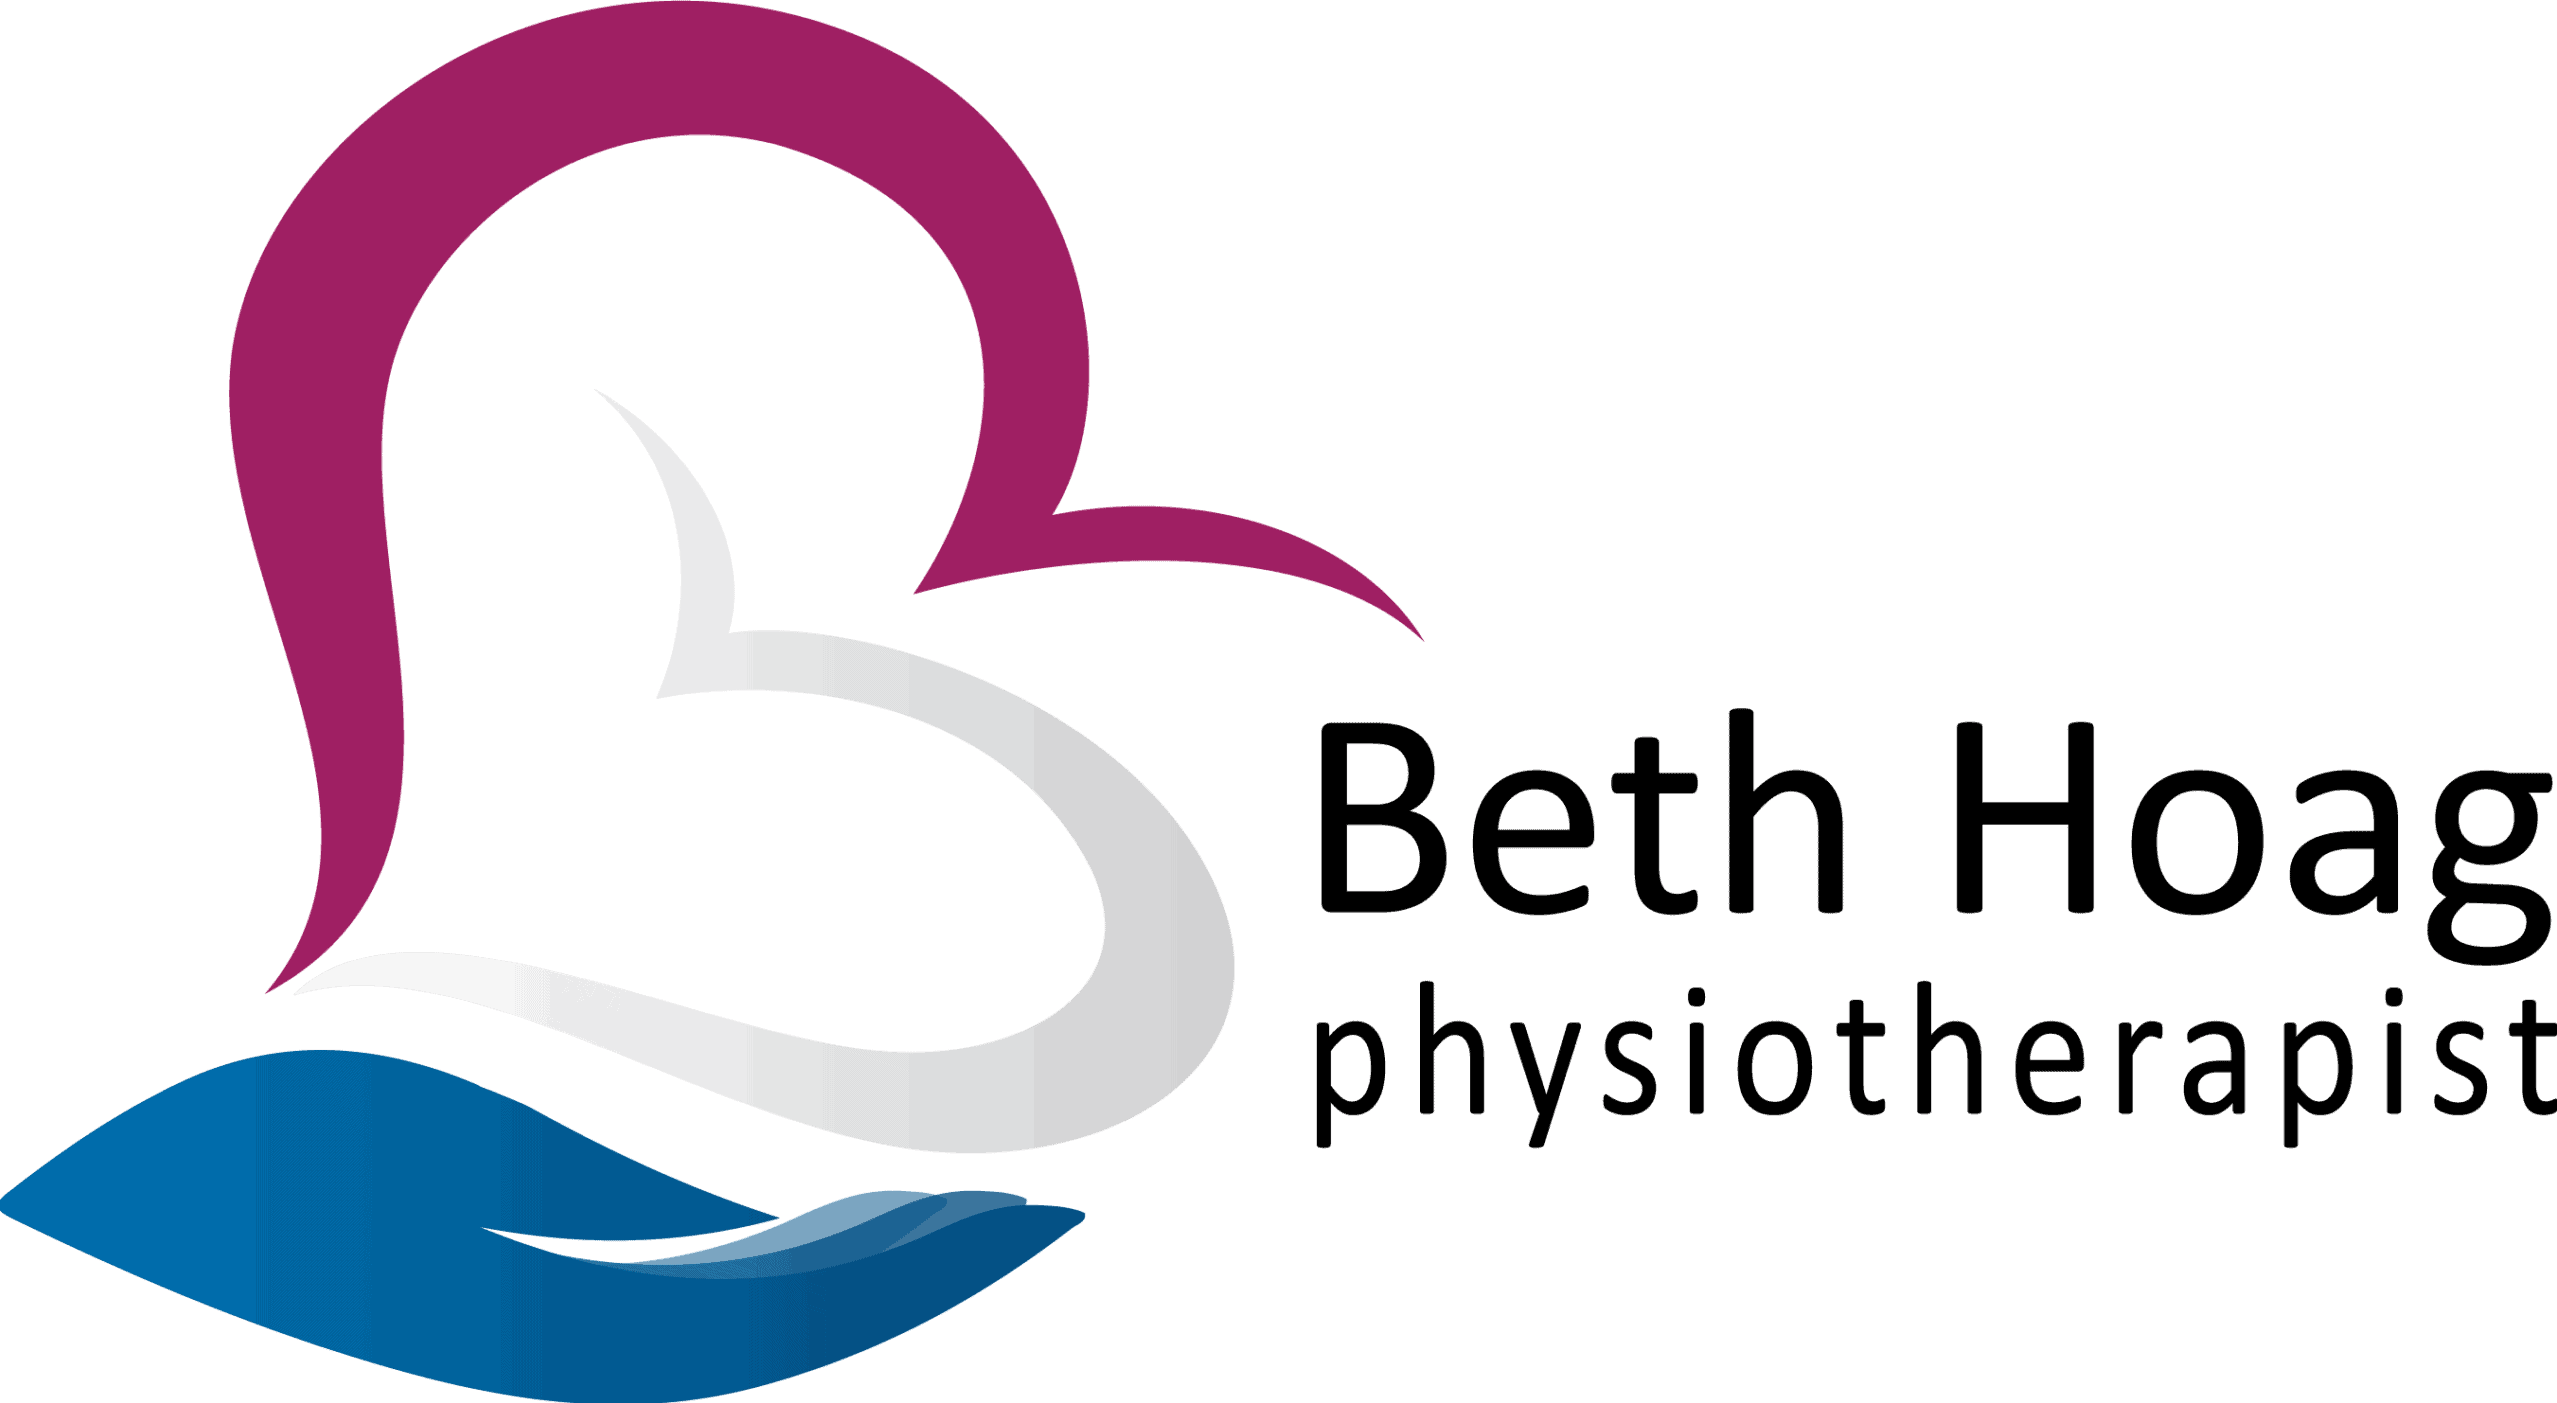 Cancer Rehabilitation and Breast Cancer Physiotherapy Ottawa, Beth Hoag.